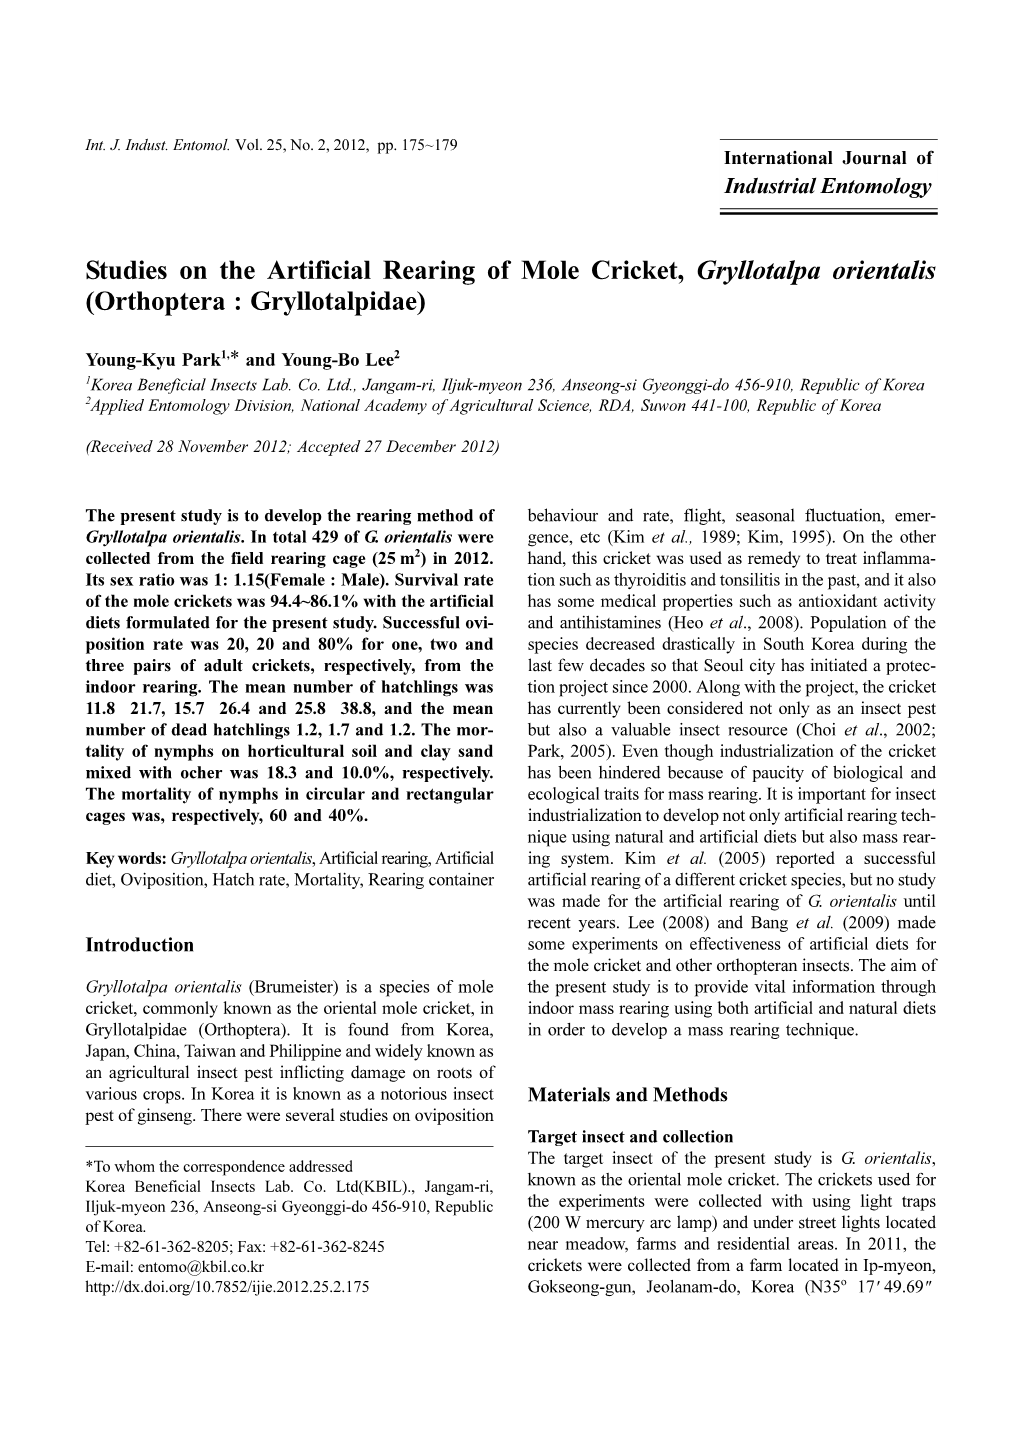 Studies on the Artificial Rearing of Mole Cricket, Gryllotalpa Orientalis (Orthoptera : Gryllotalpidae)